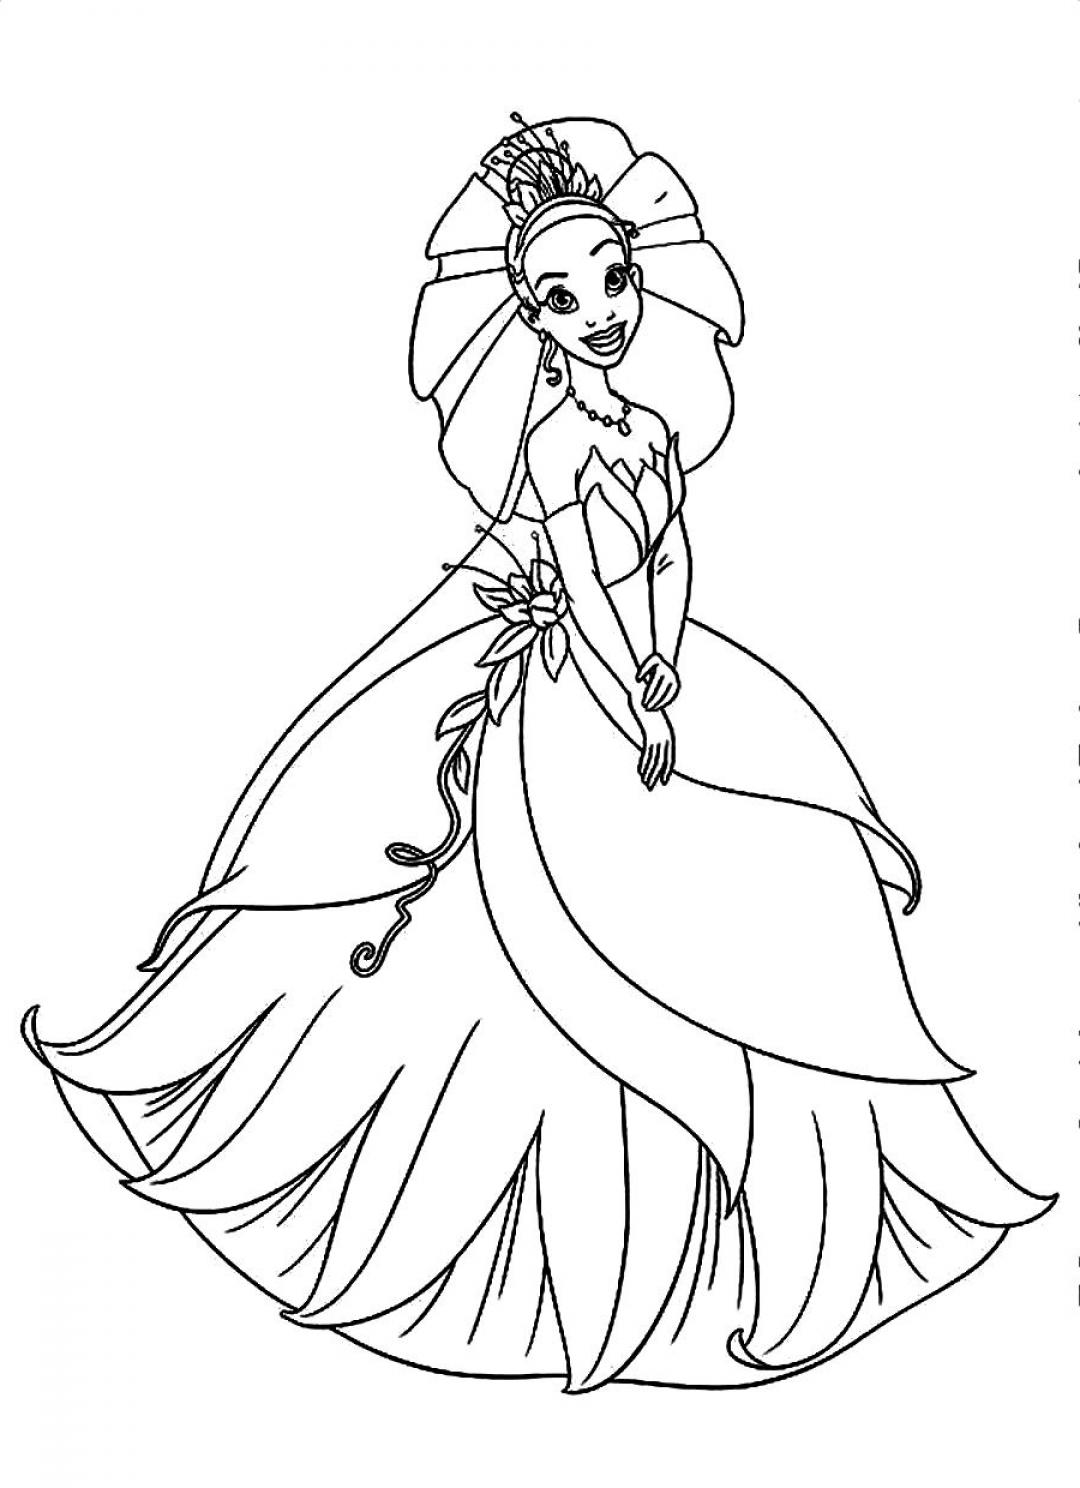 Princess Tiana coloring pages. - SheetalColor.com